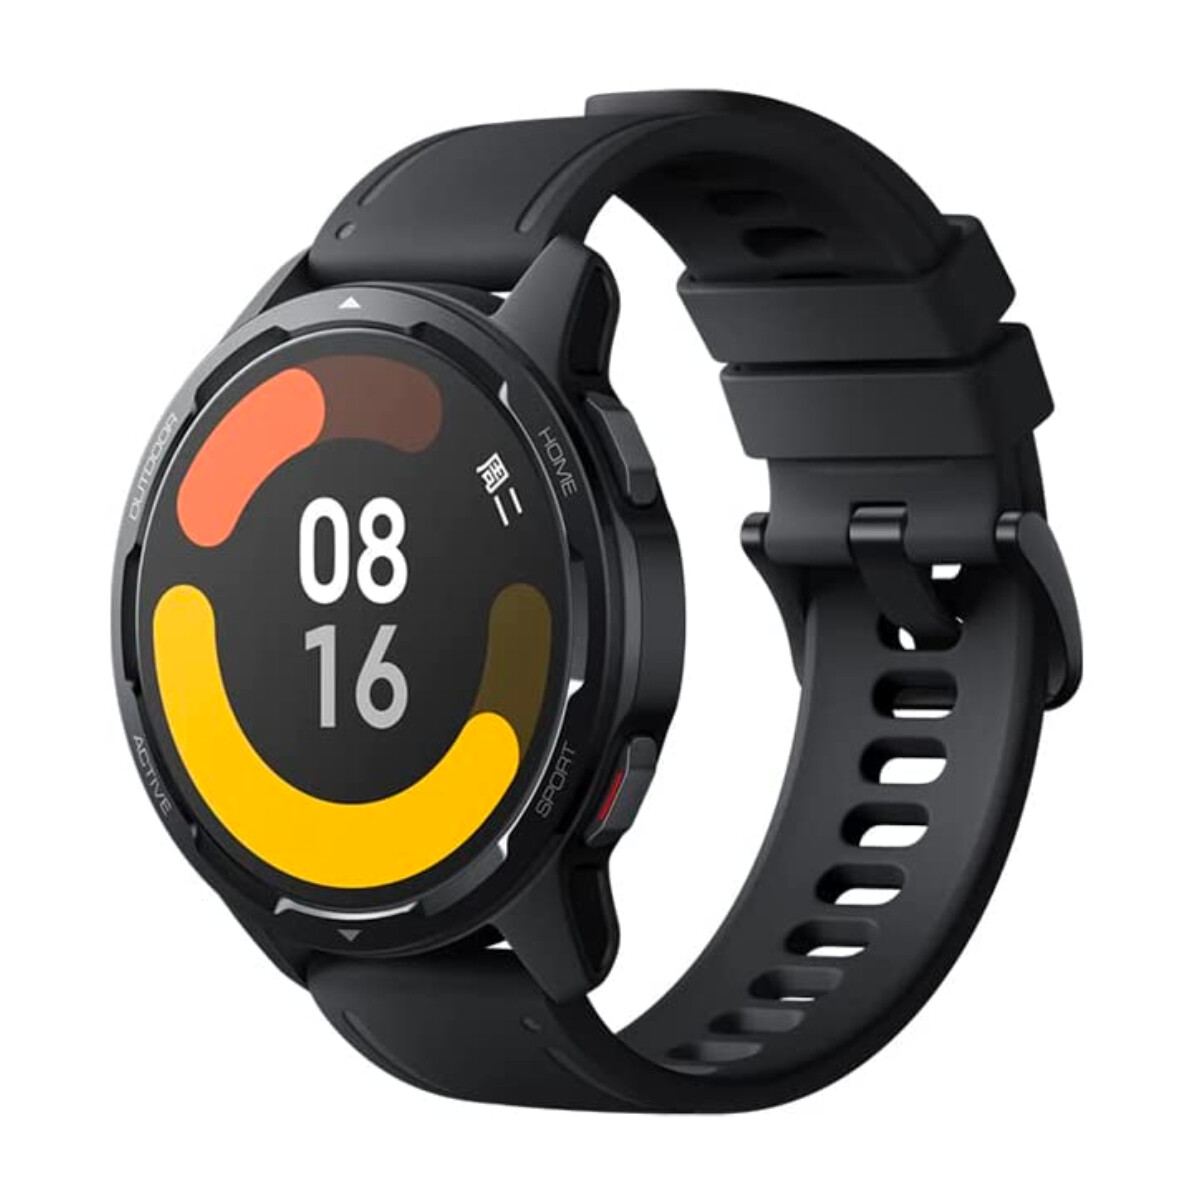 Smartwatch mi watch s1 active xiaomi - Space black 